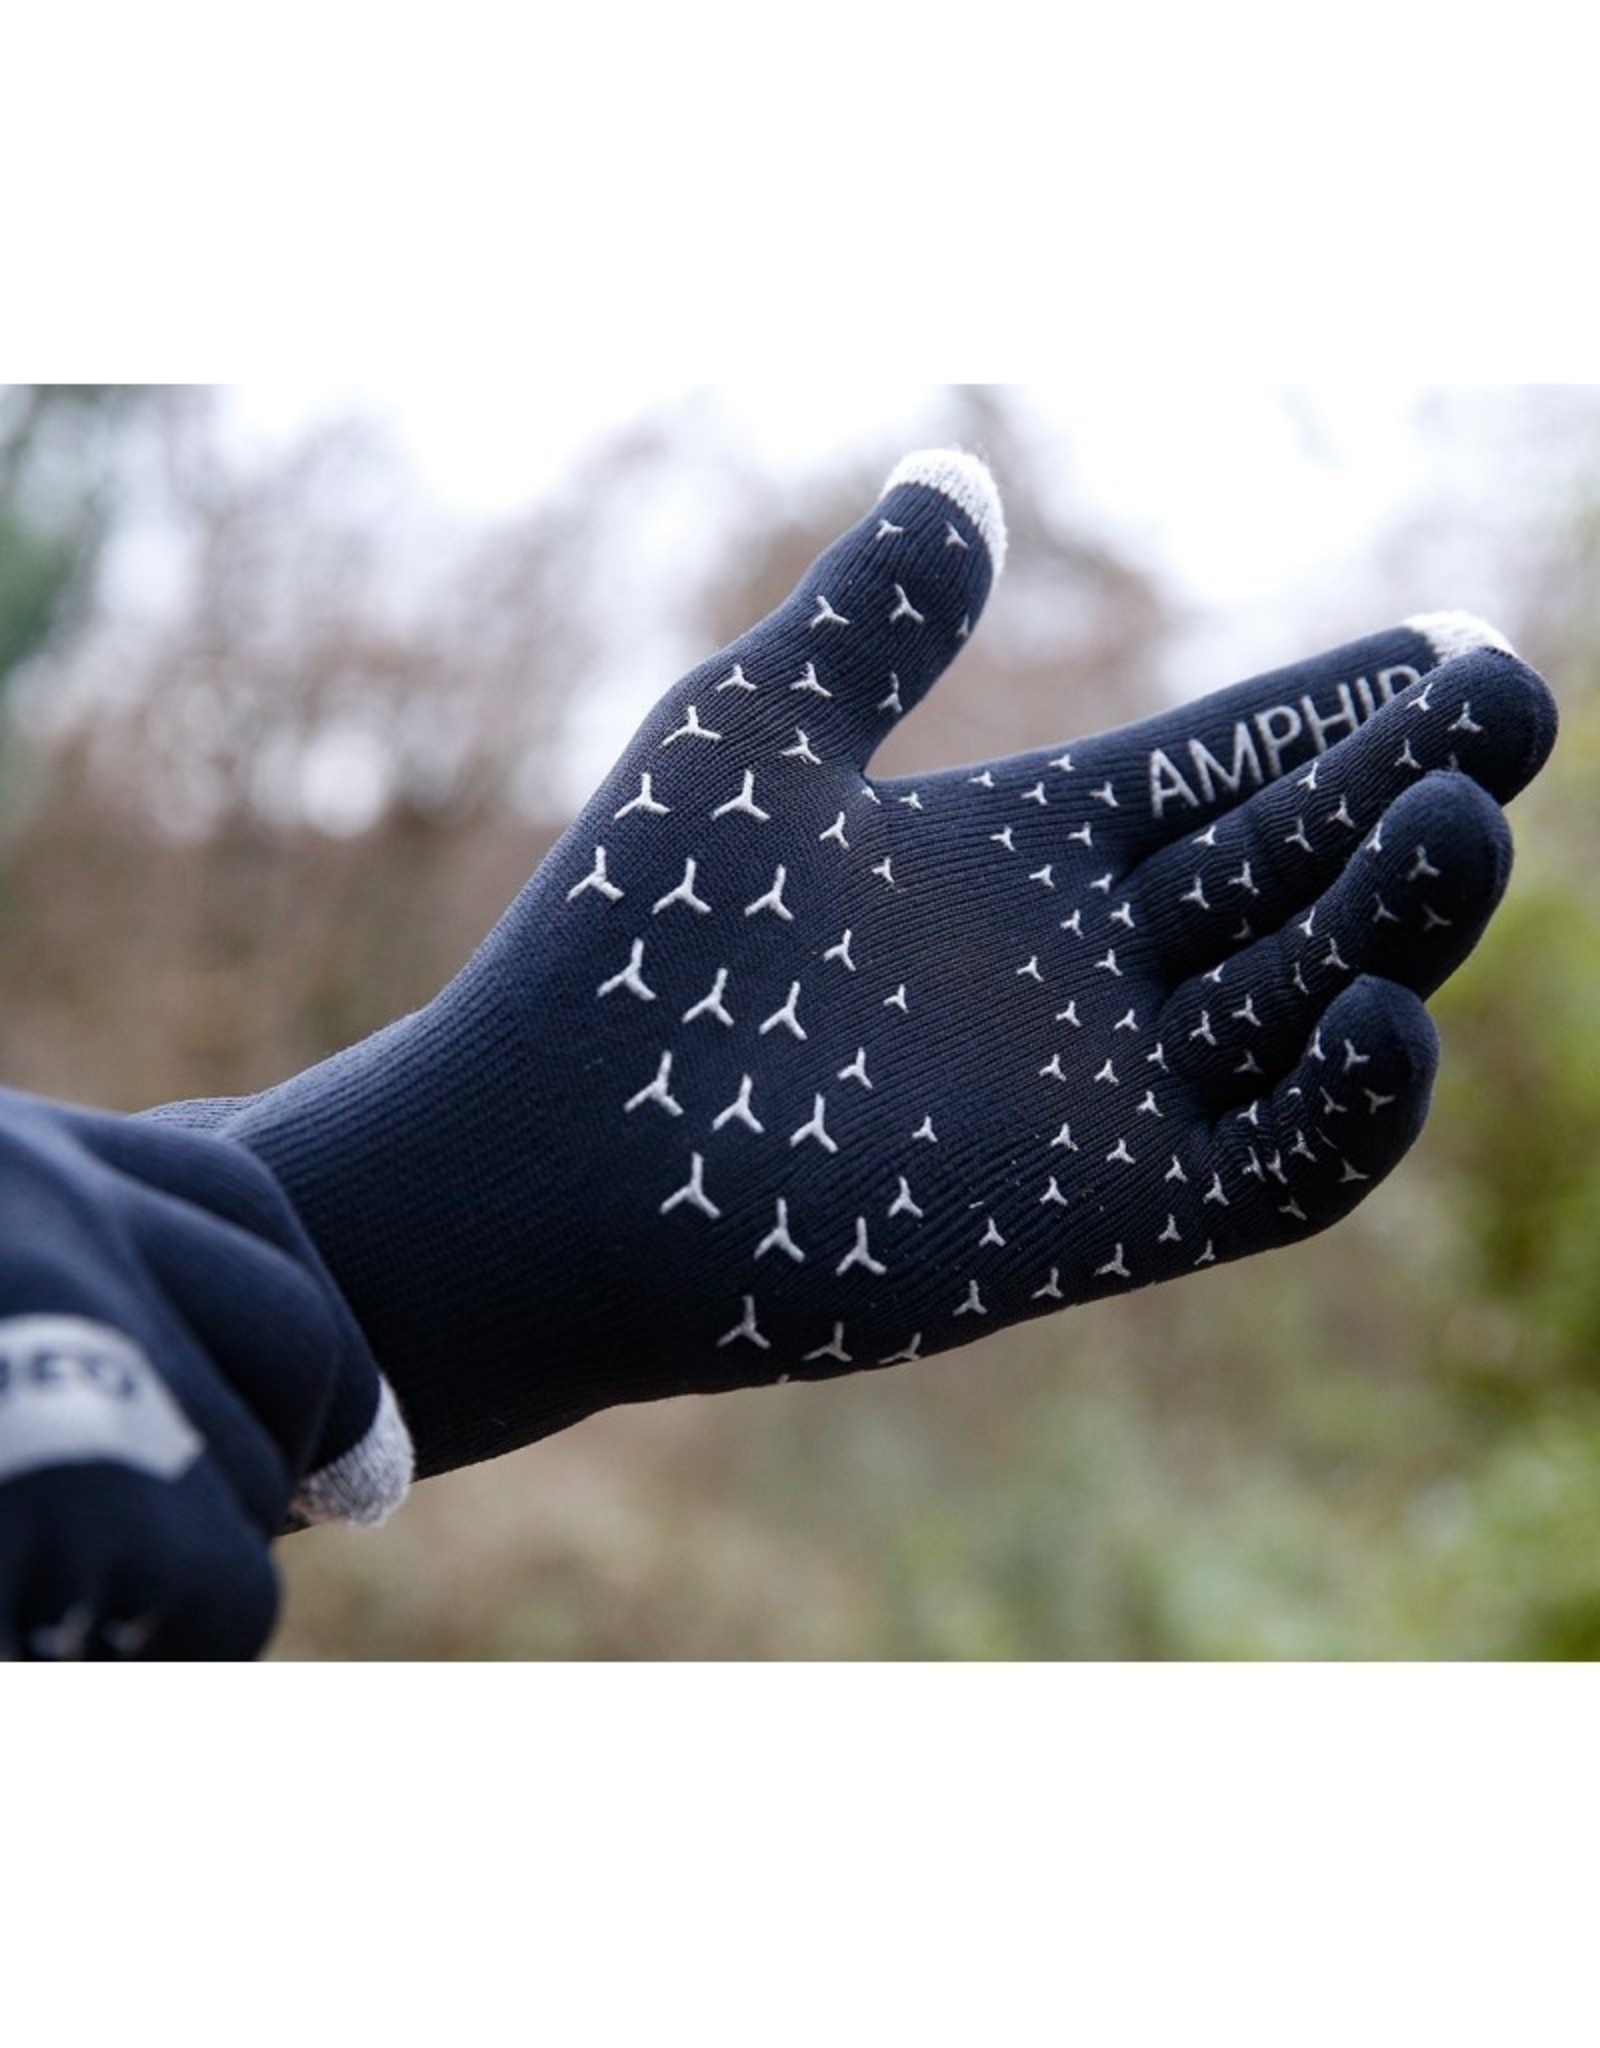 Glove Amphib - black